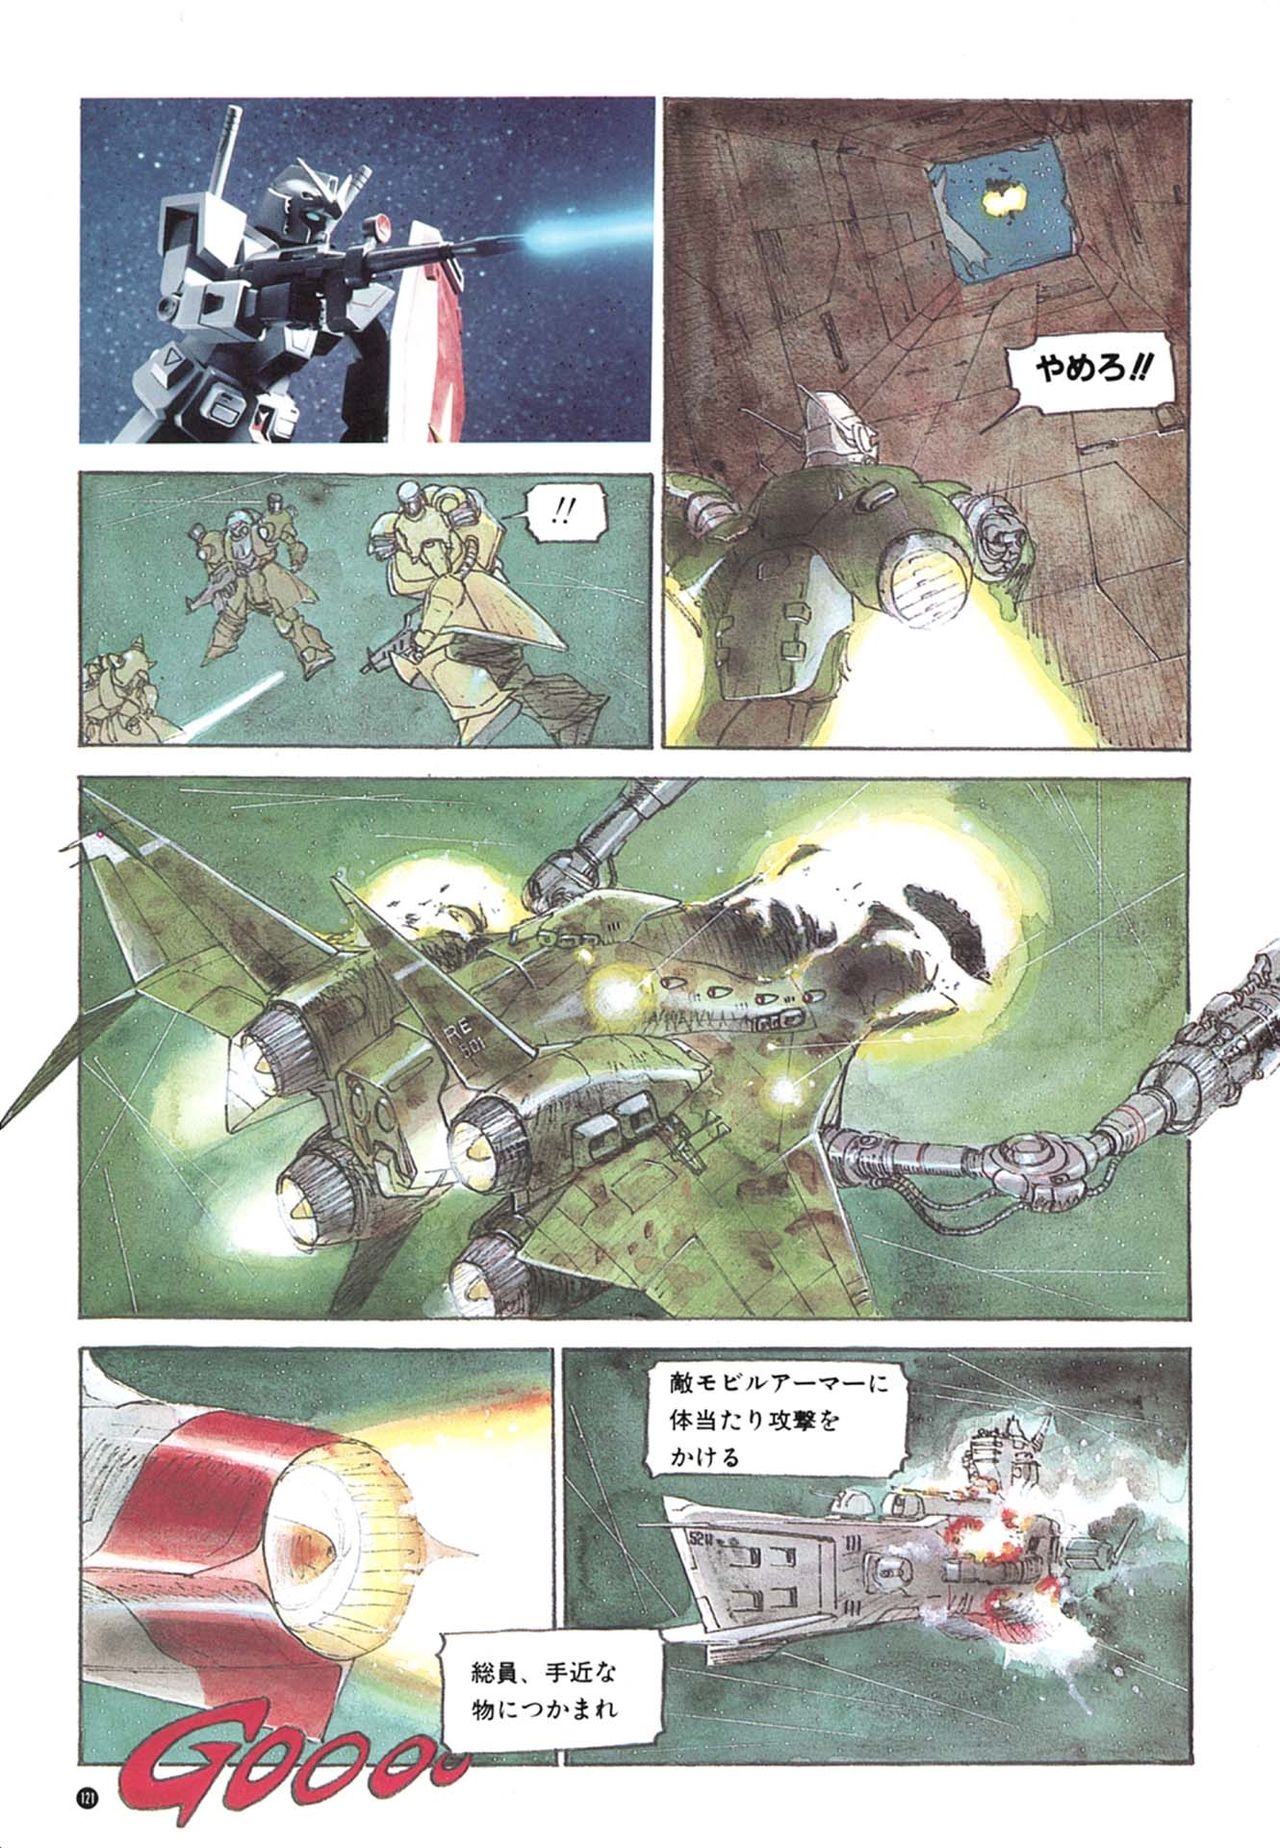 [Kazuhisa Kondo] Kazuhisa Kondo 2D & 3D Works - Go Ahead - From Mobile Suit Gundam to Original Mechanism 120